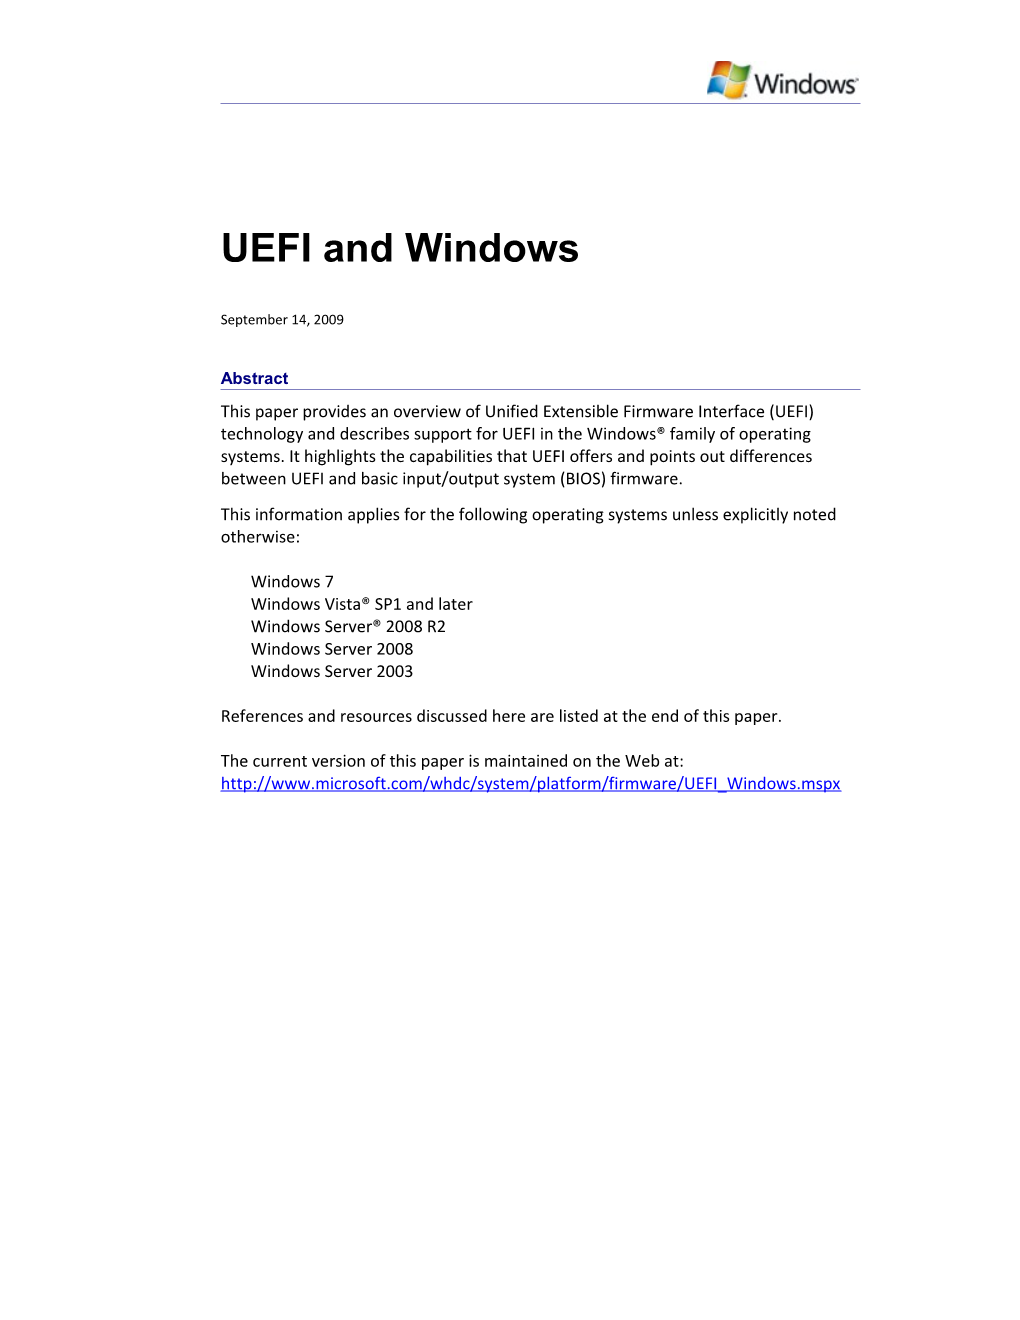 UEFI and Windows - 1